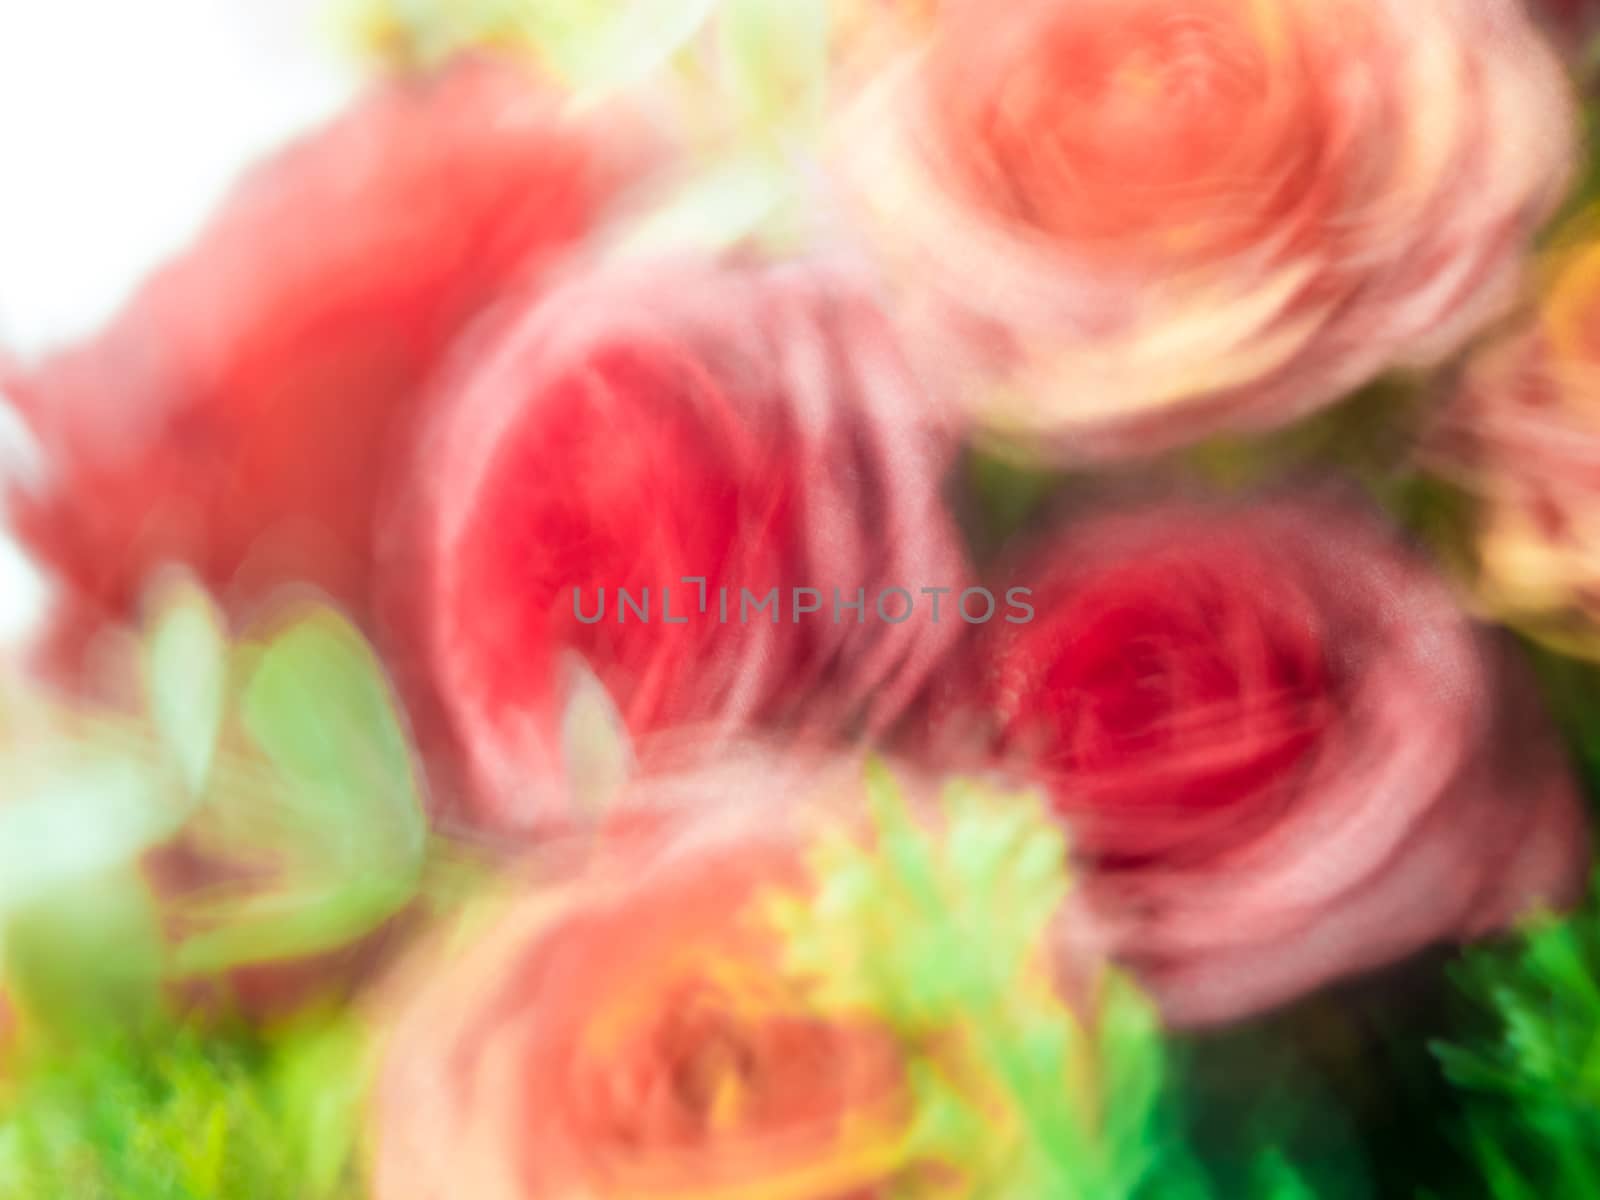 Blurred flowers in artificial flower bouquet by Satakorn